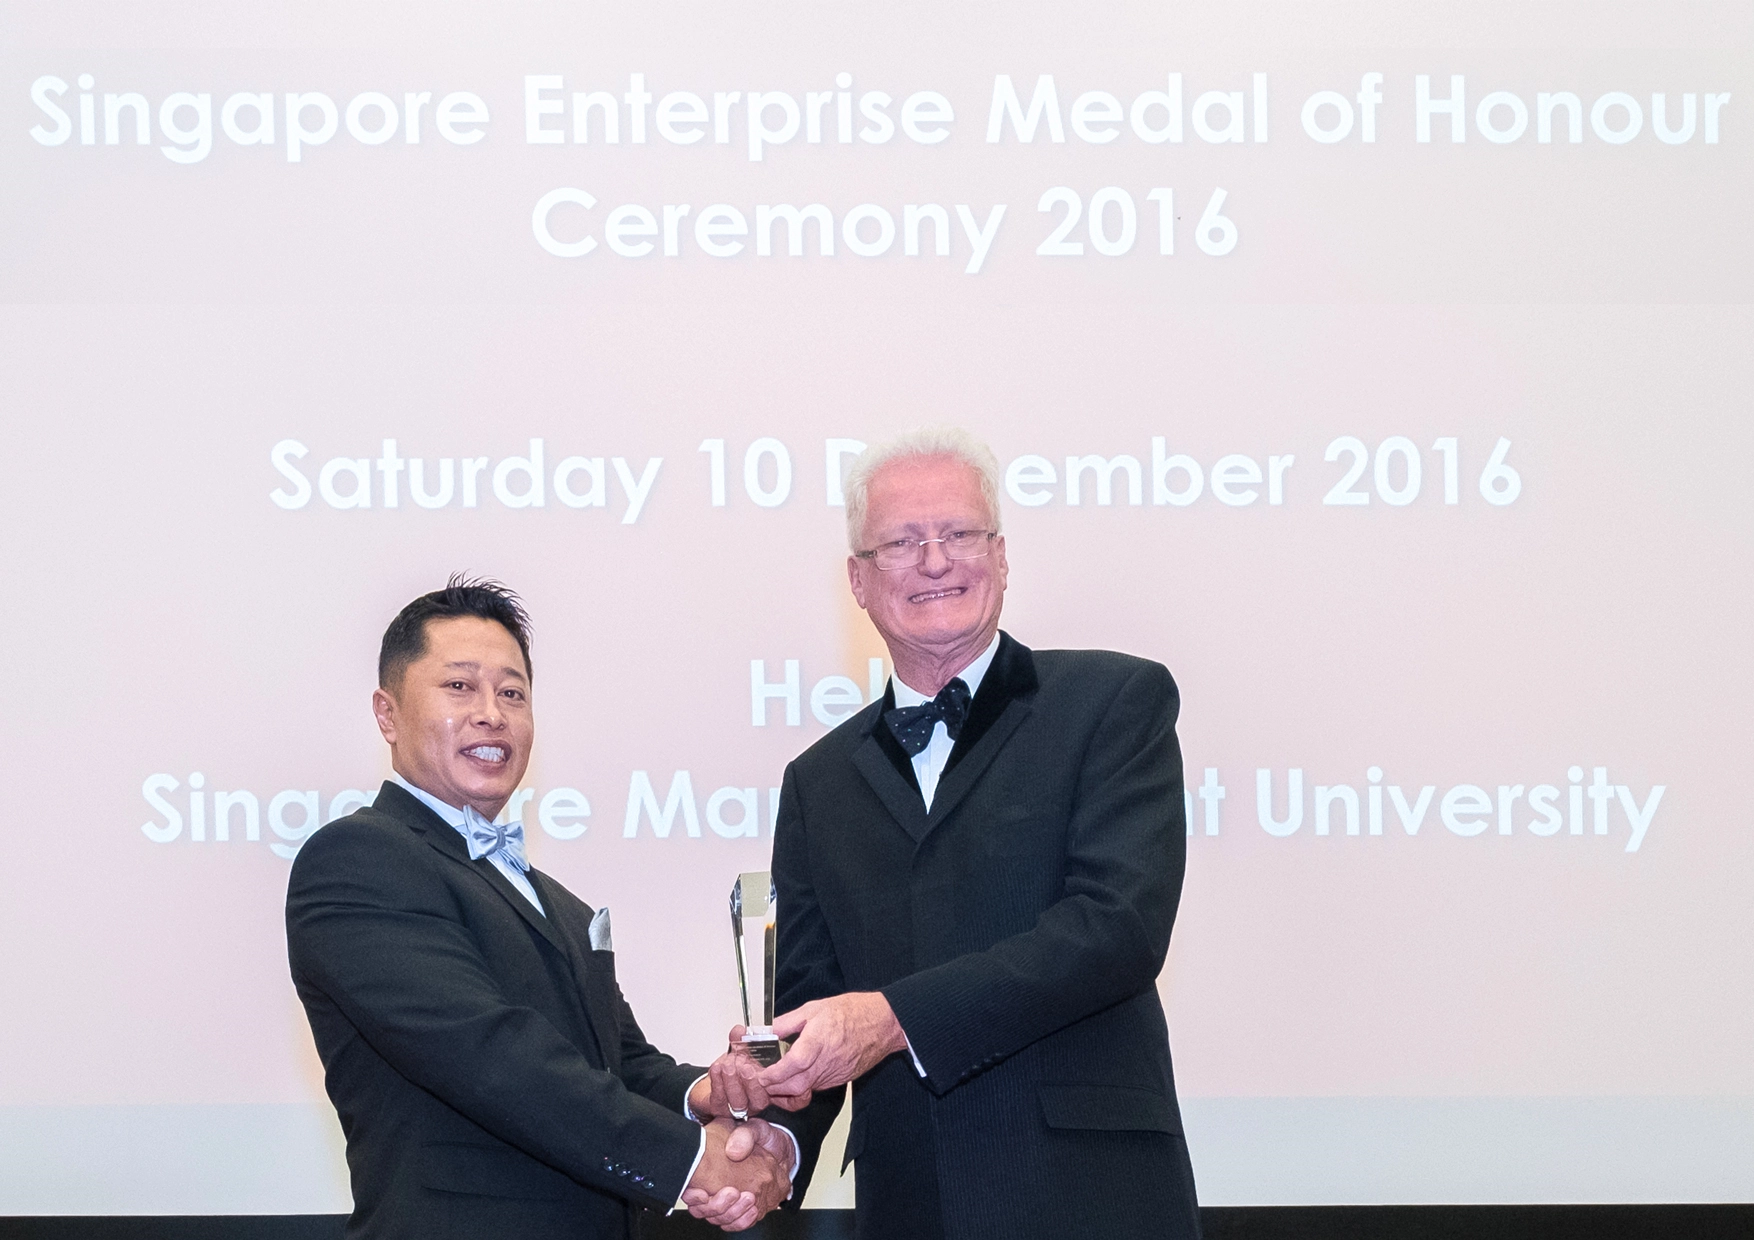 Singapore Enterprise Medal of Honour Award presented by Professor Dr Karl (2017)